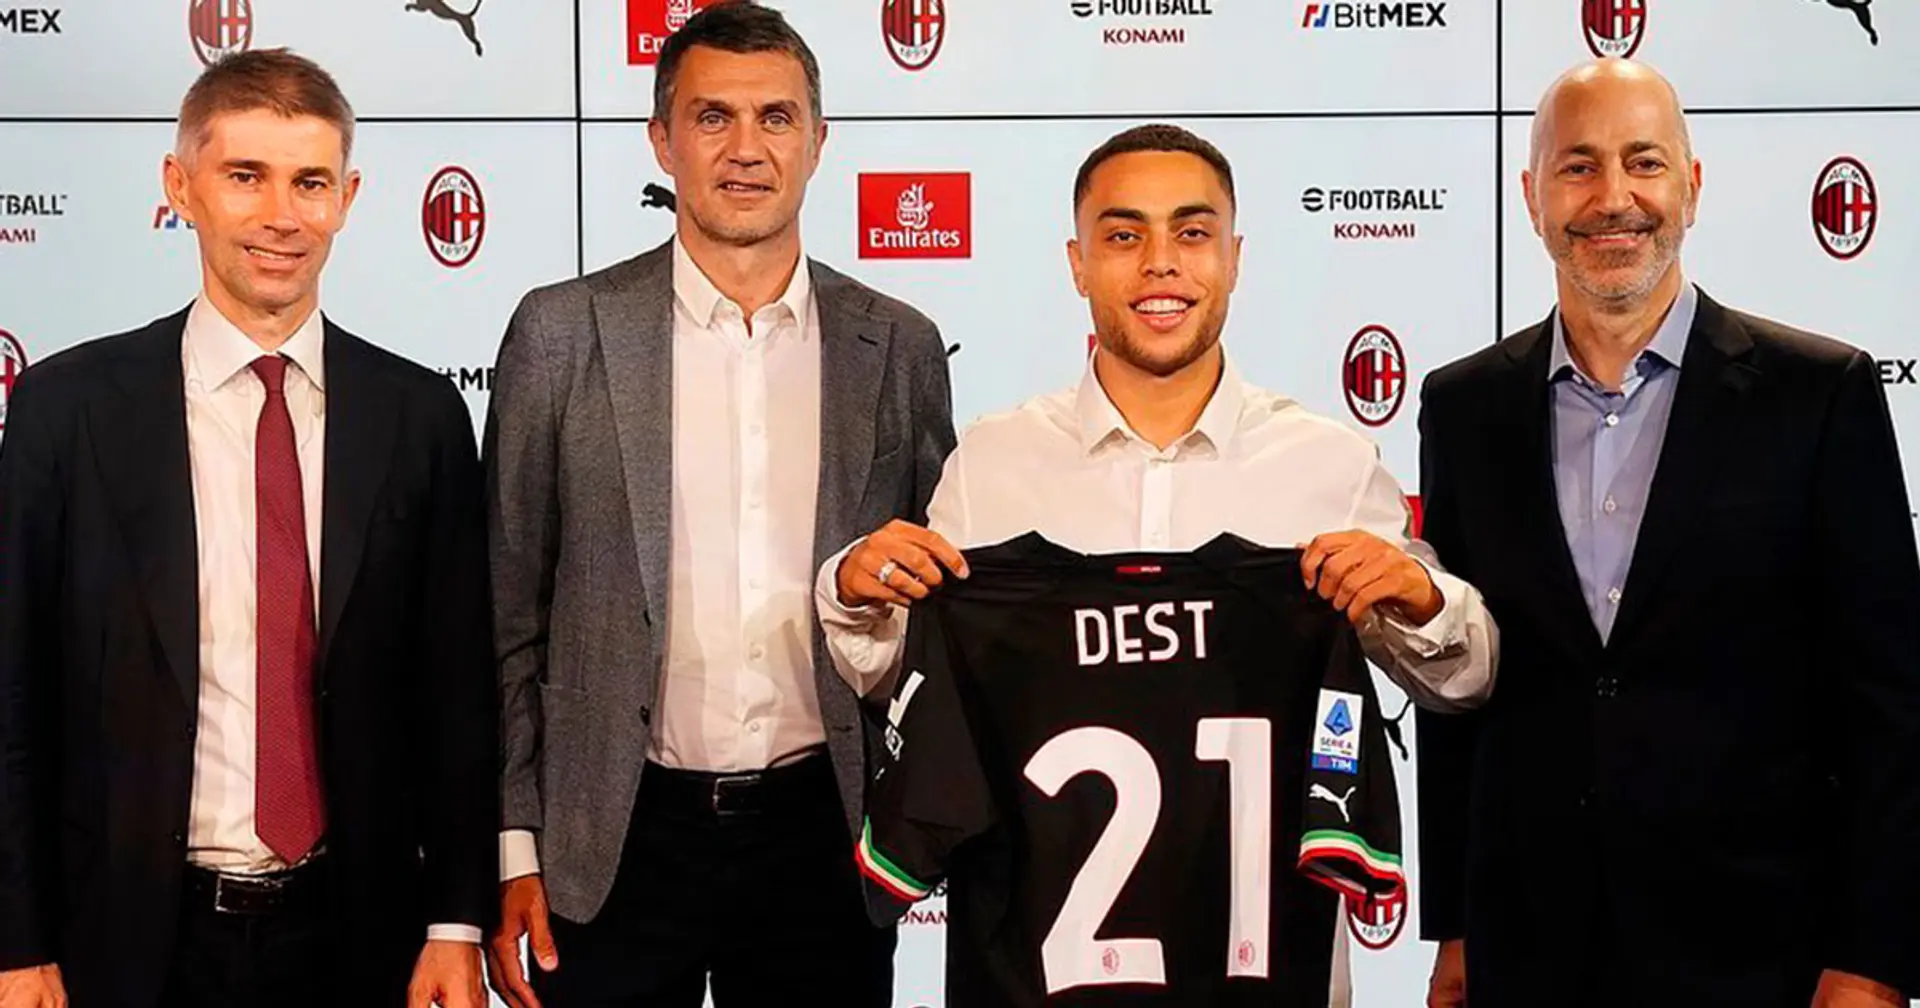 OFFICIAL: Dest joins AC Milan